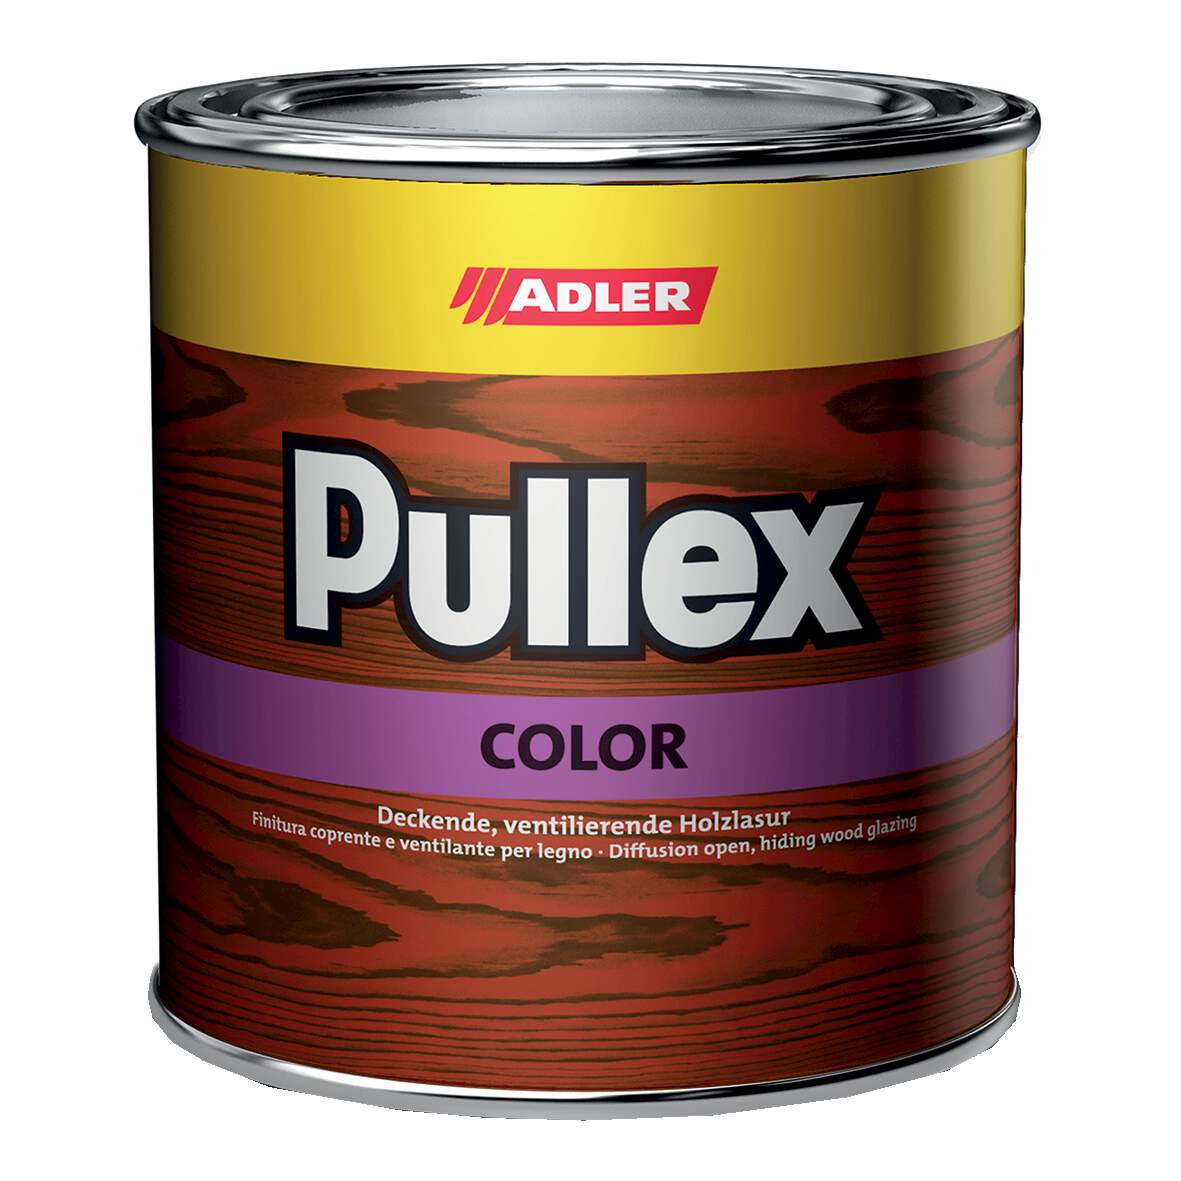 1132265 - Pullex color, Abtönung